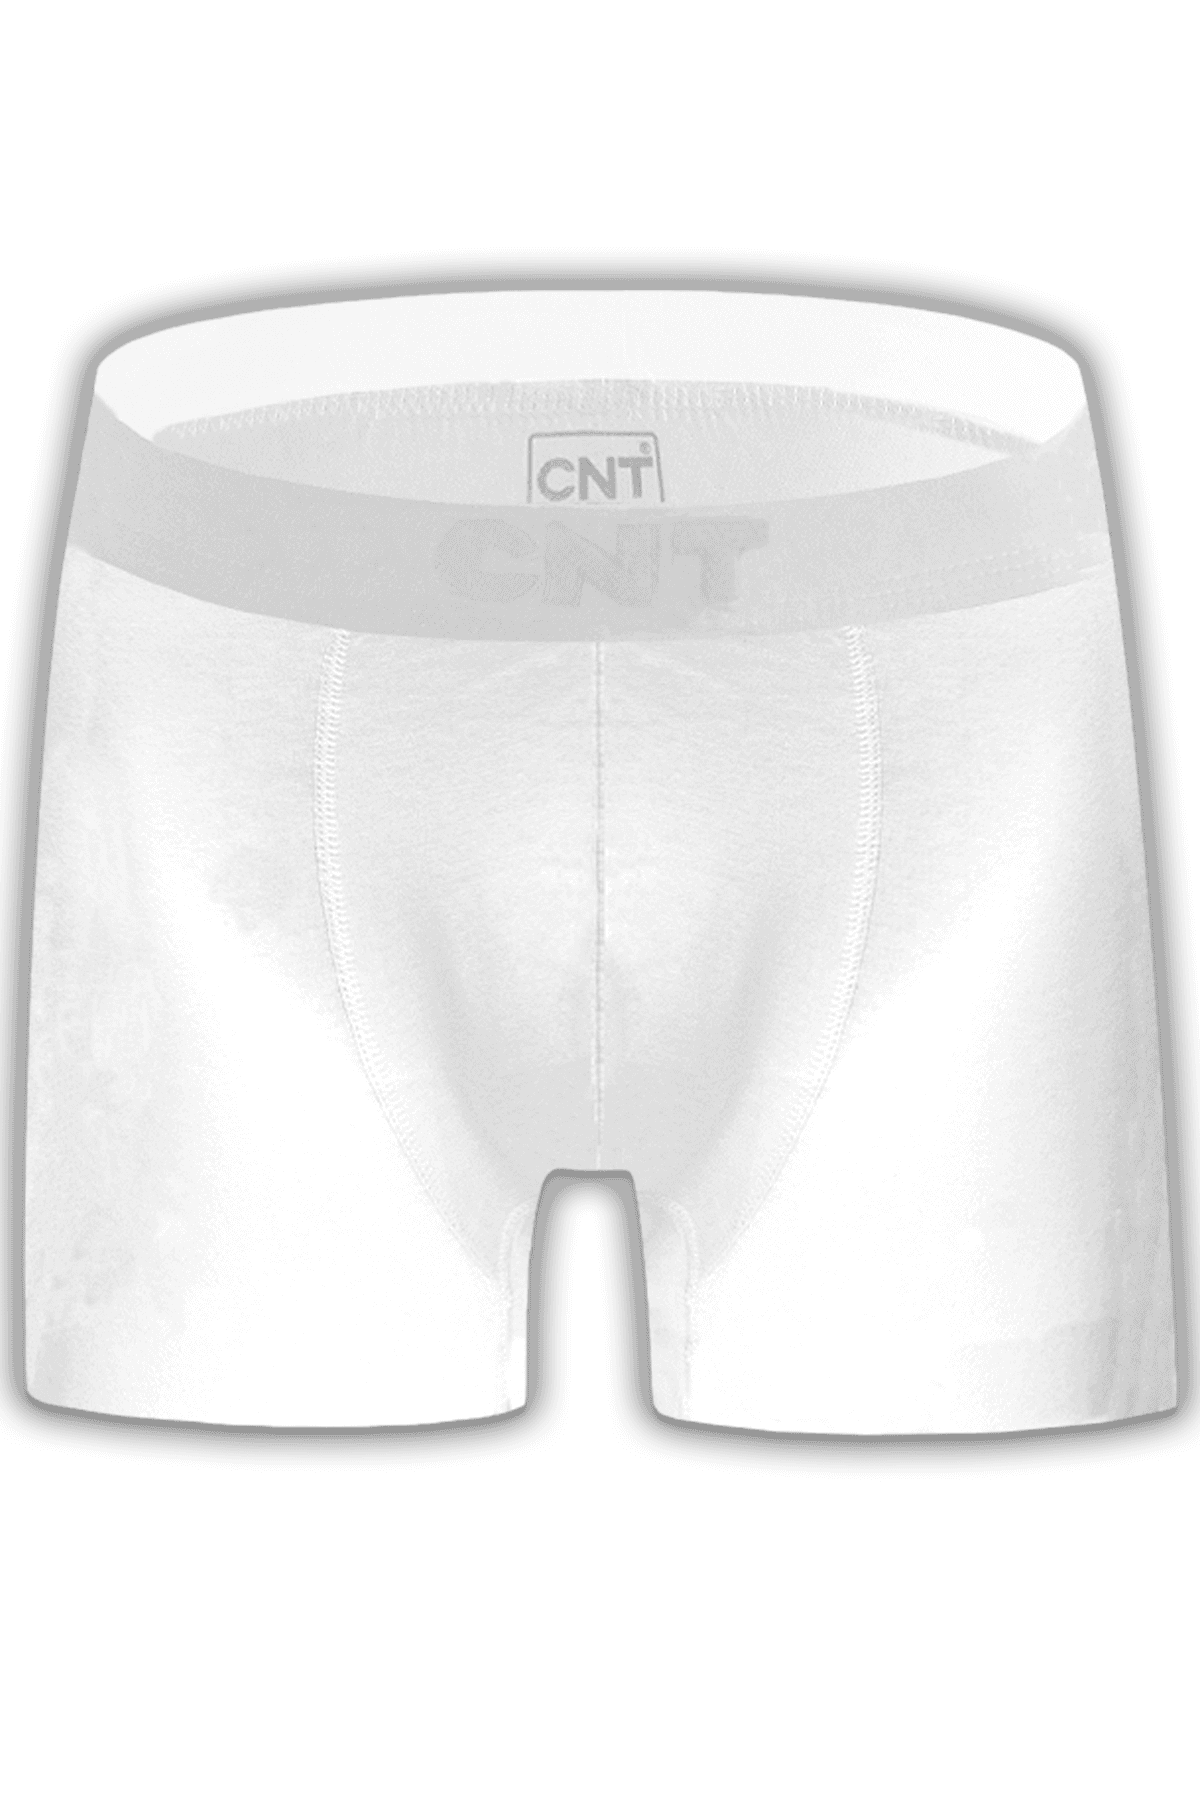 CNT Premium Боксерки памучни - бели